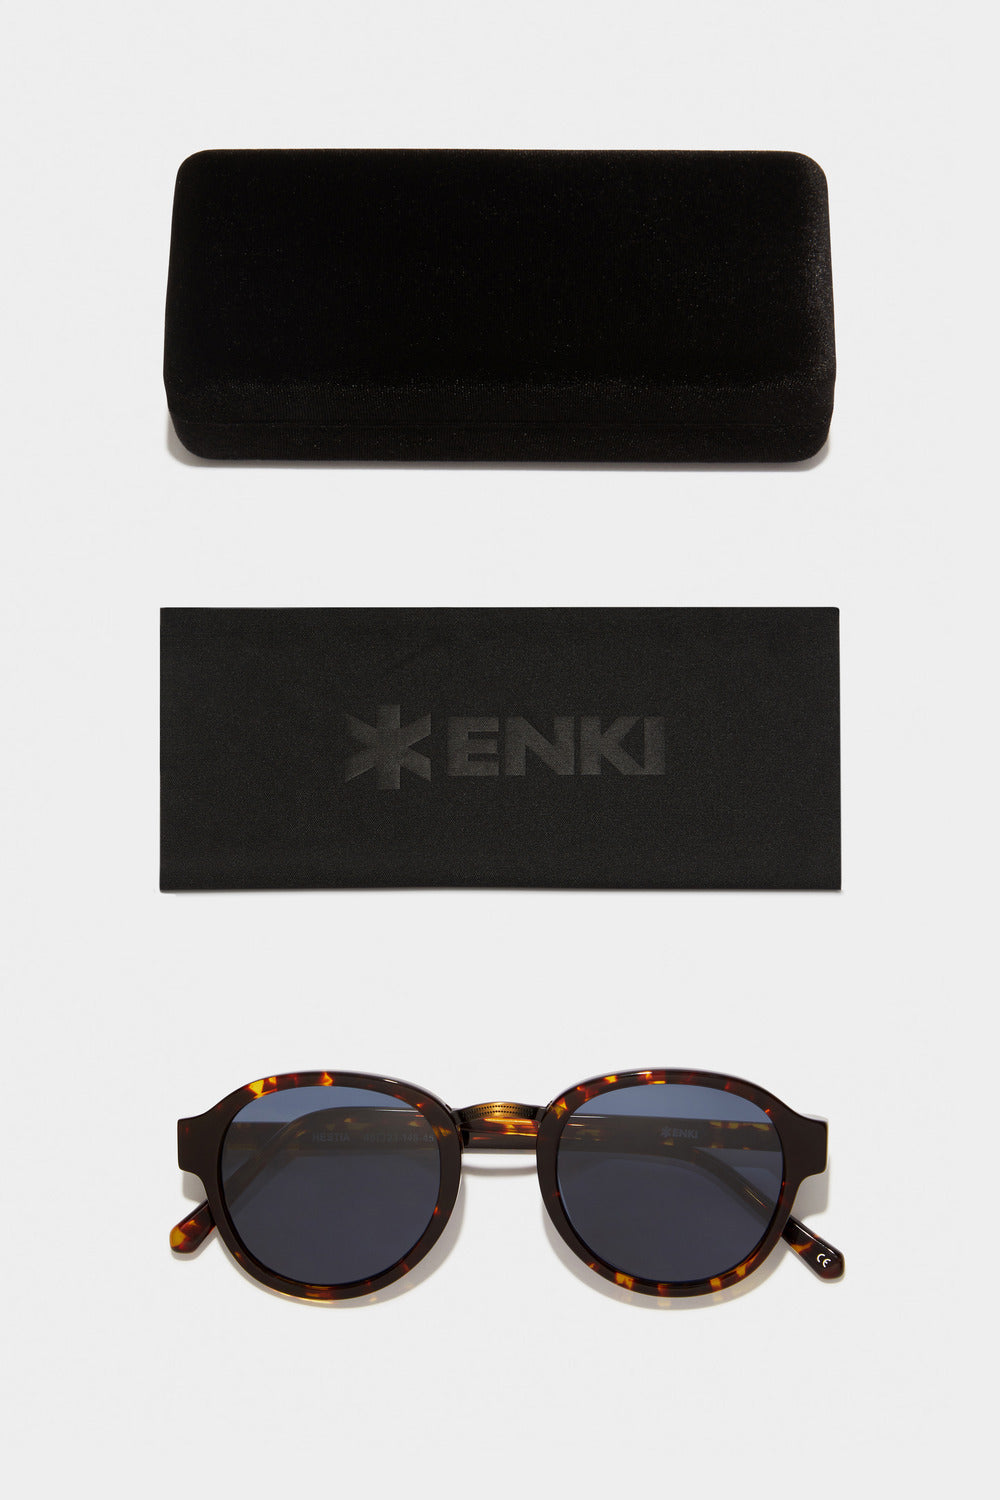 www.enkieyewear.com Hestia Men’s and Women’s Sunglasses